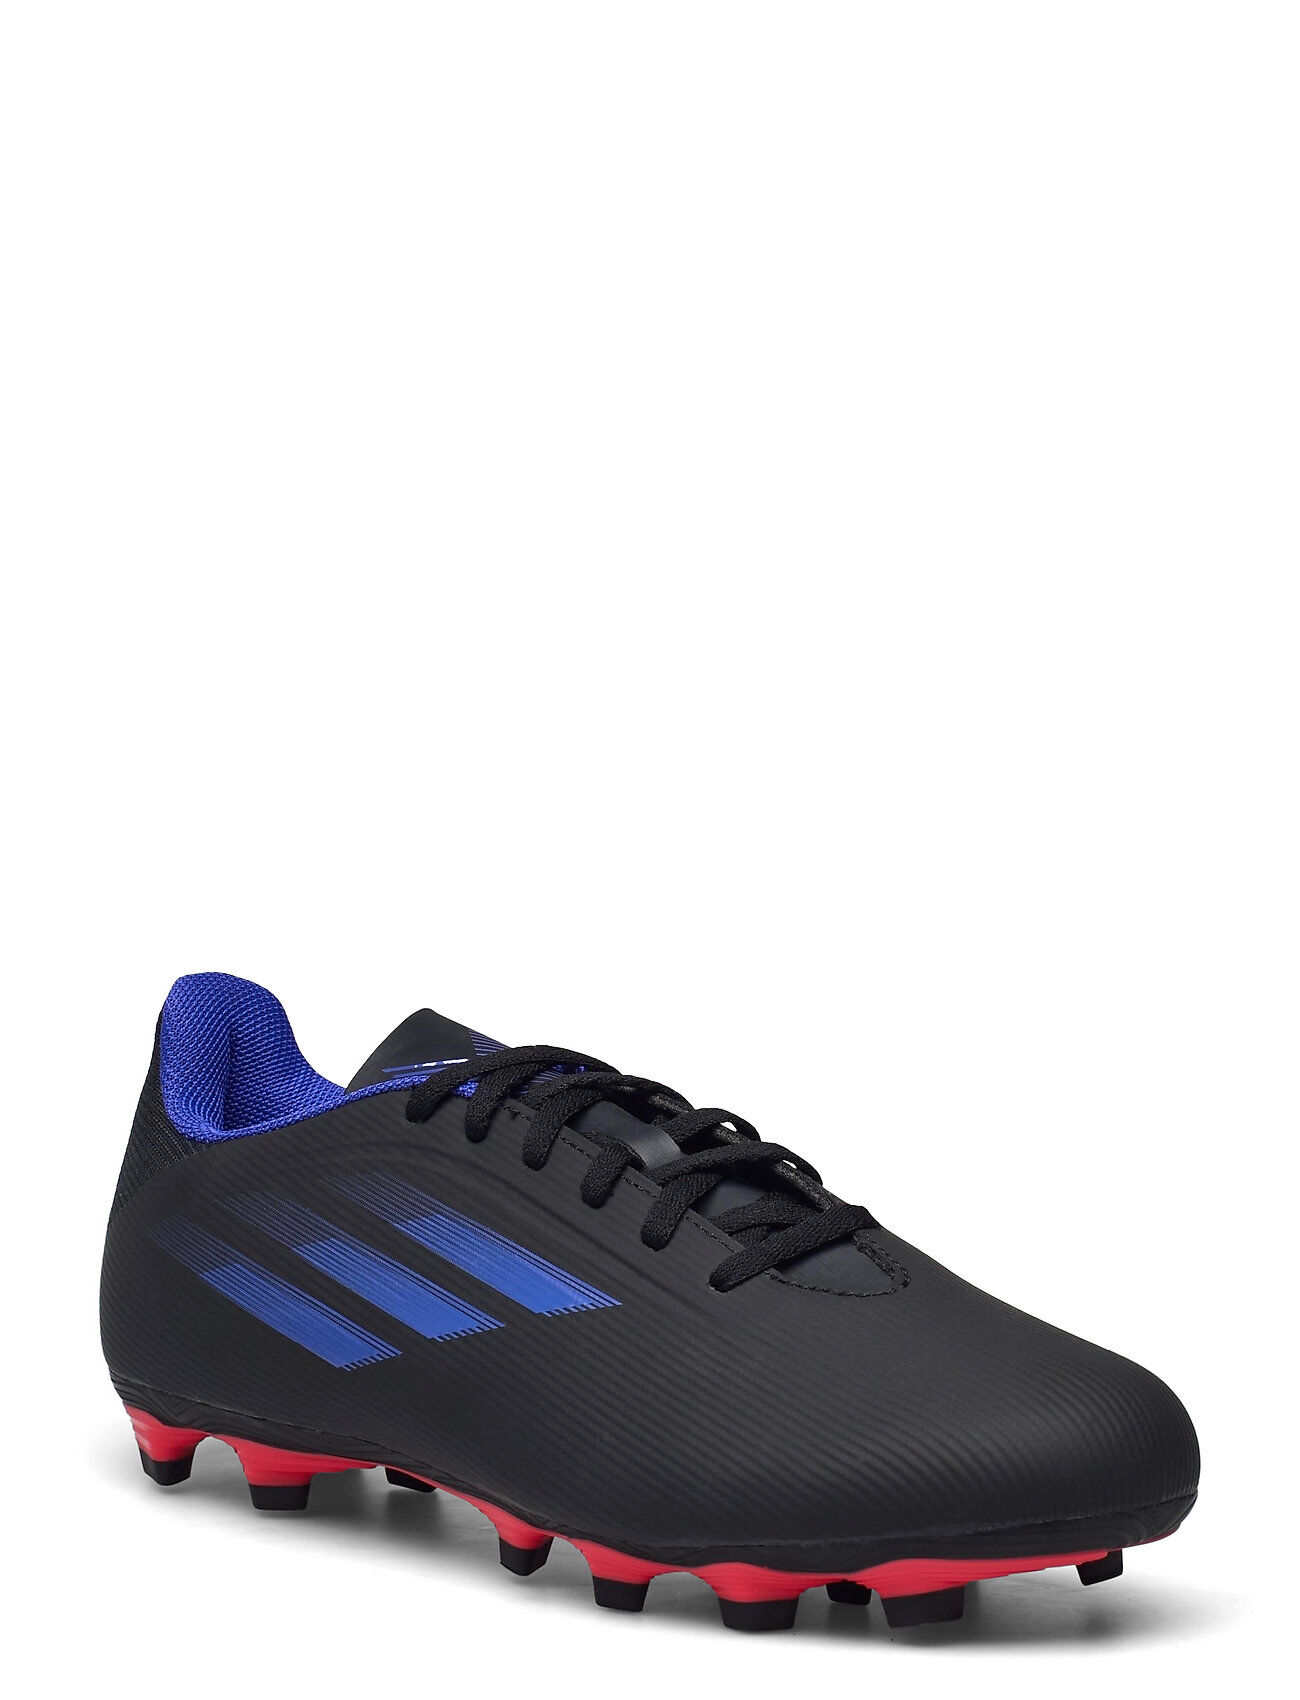 adidas Performance X Speedflow.4 Flexible Ground Boots Shoes Sport Shoes Football Boots Svart Adidas Performance